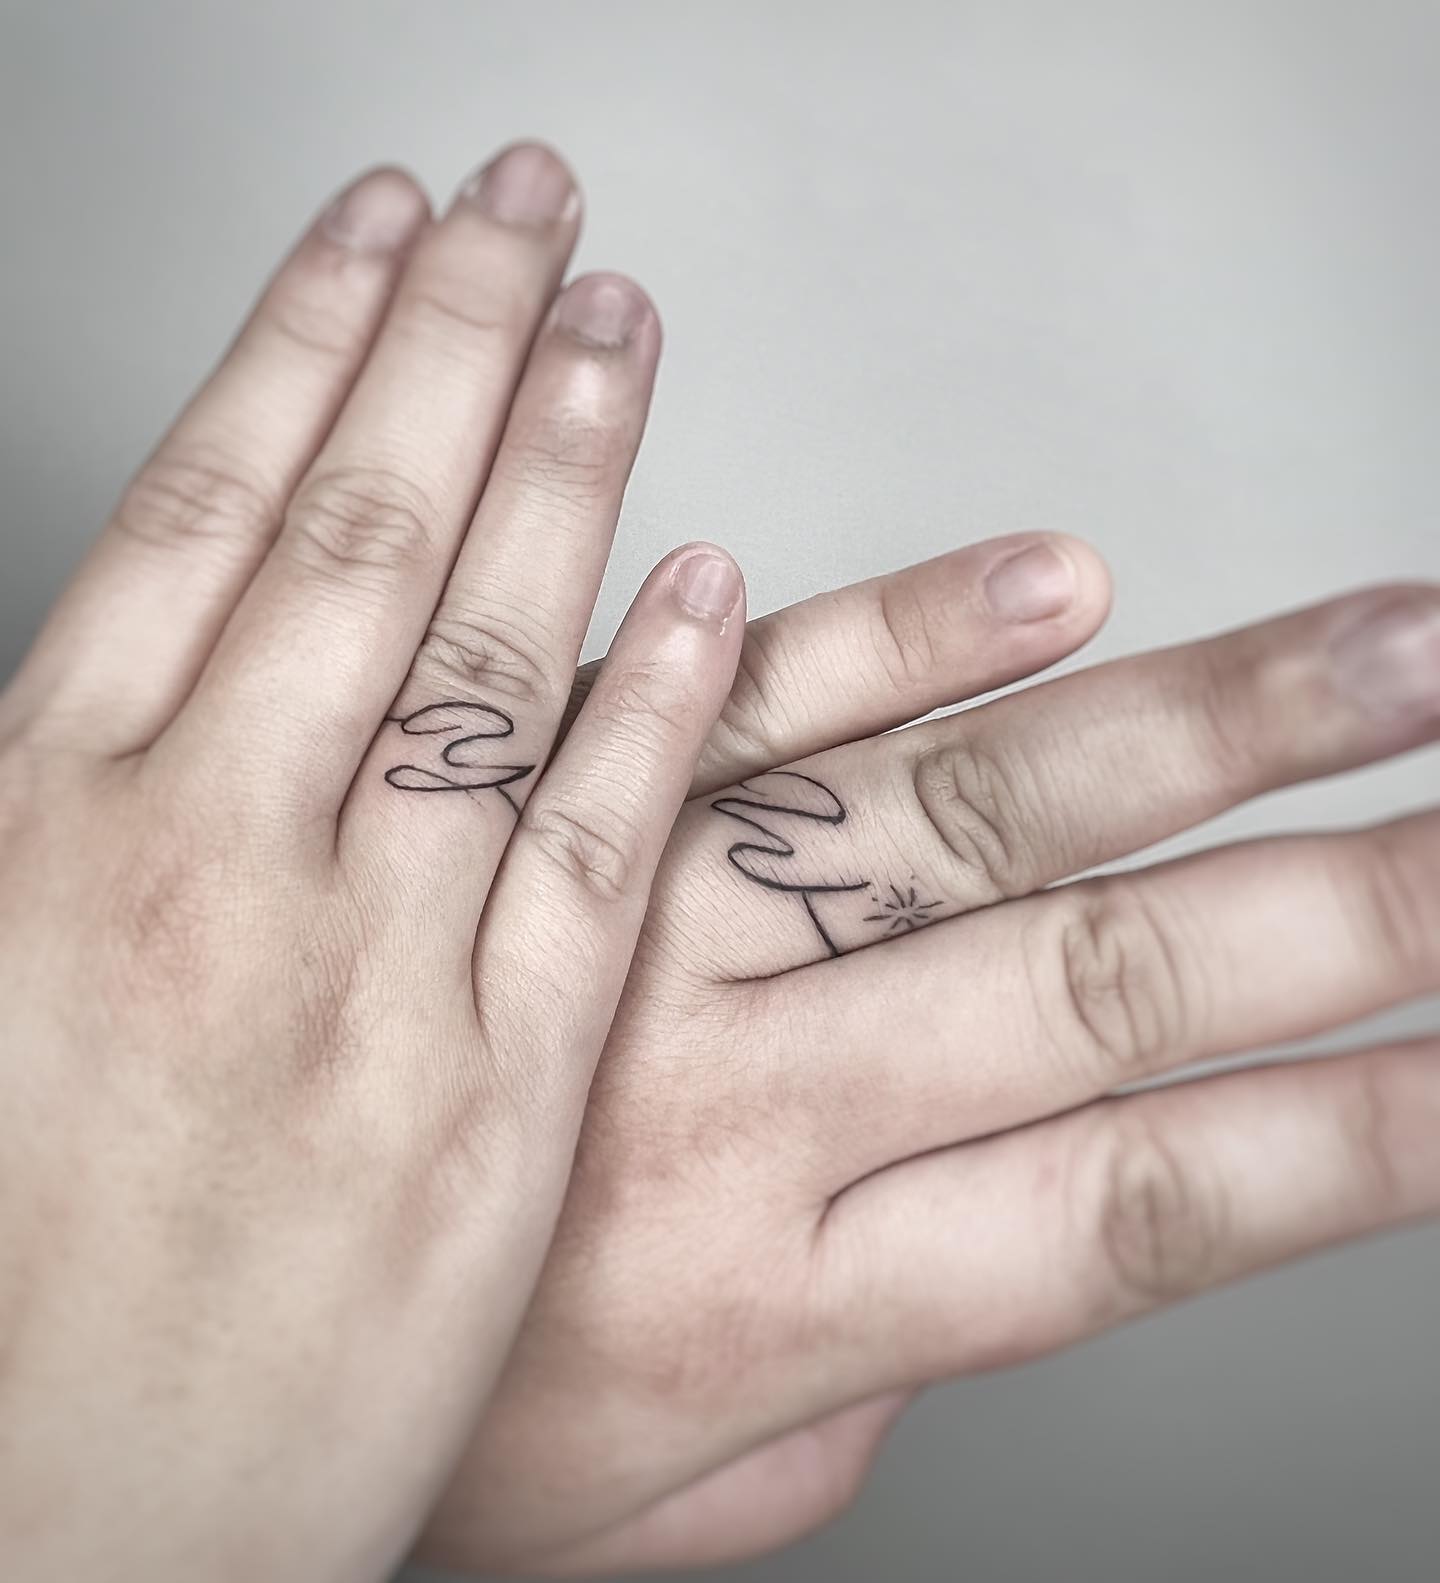 12 Gorgeous Engagement Tattoos That Make Diamonds Look Plain Dismal